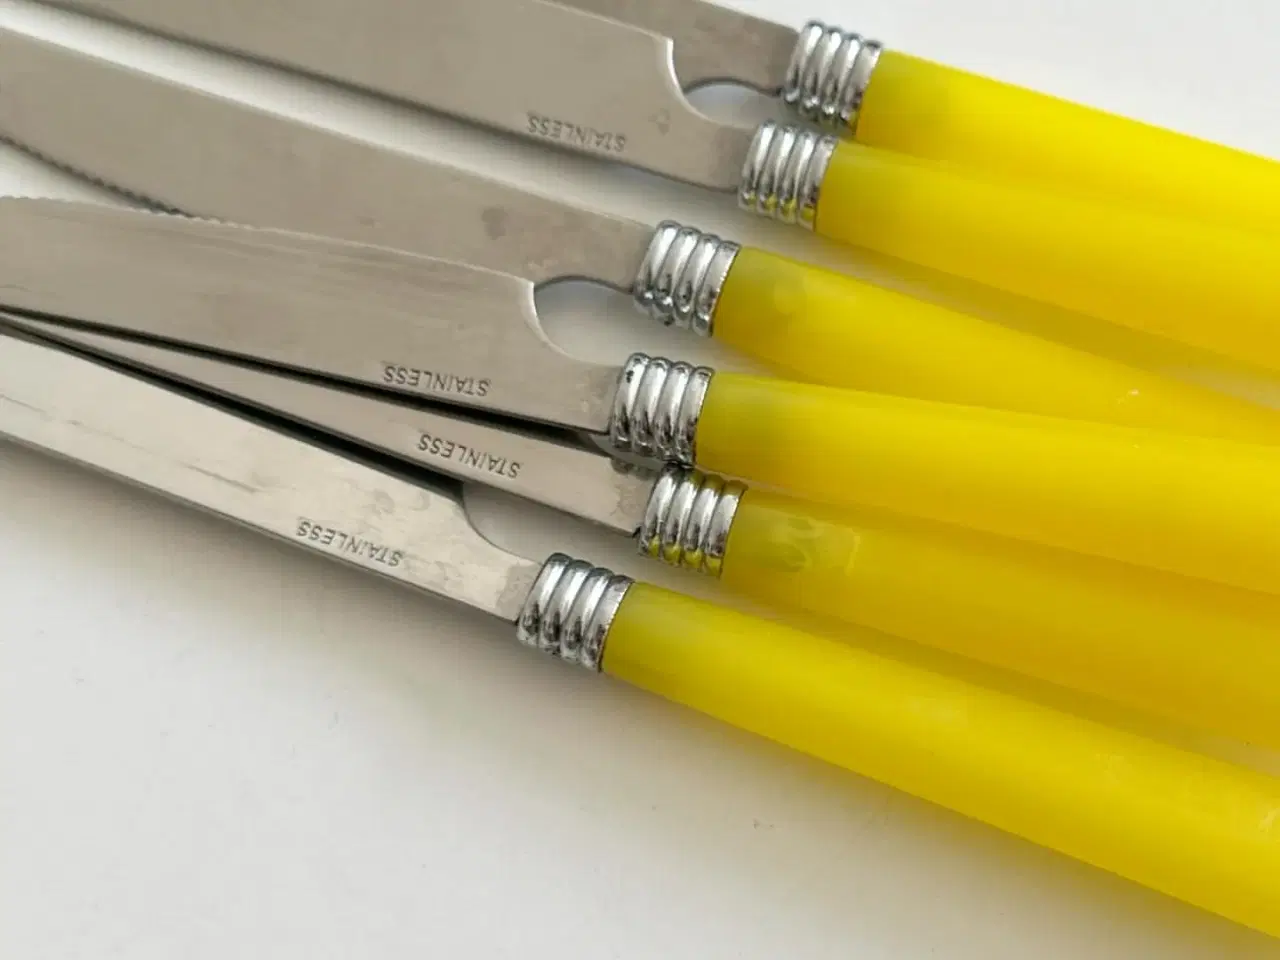 Billede 3 - Retro knive, stål og gul plast, 6 stk samlet